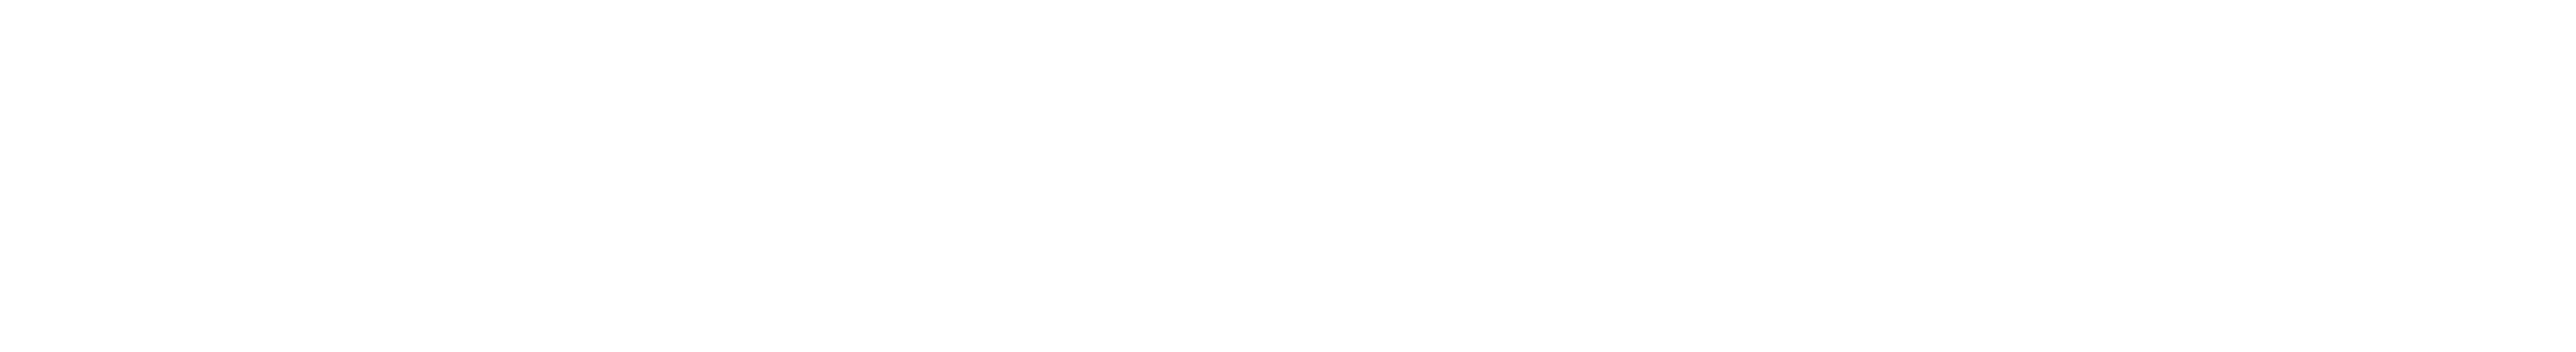 XRA Developer's Guide Logo